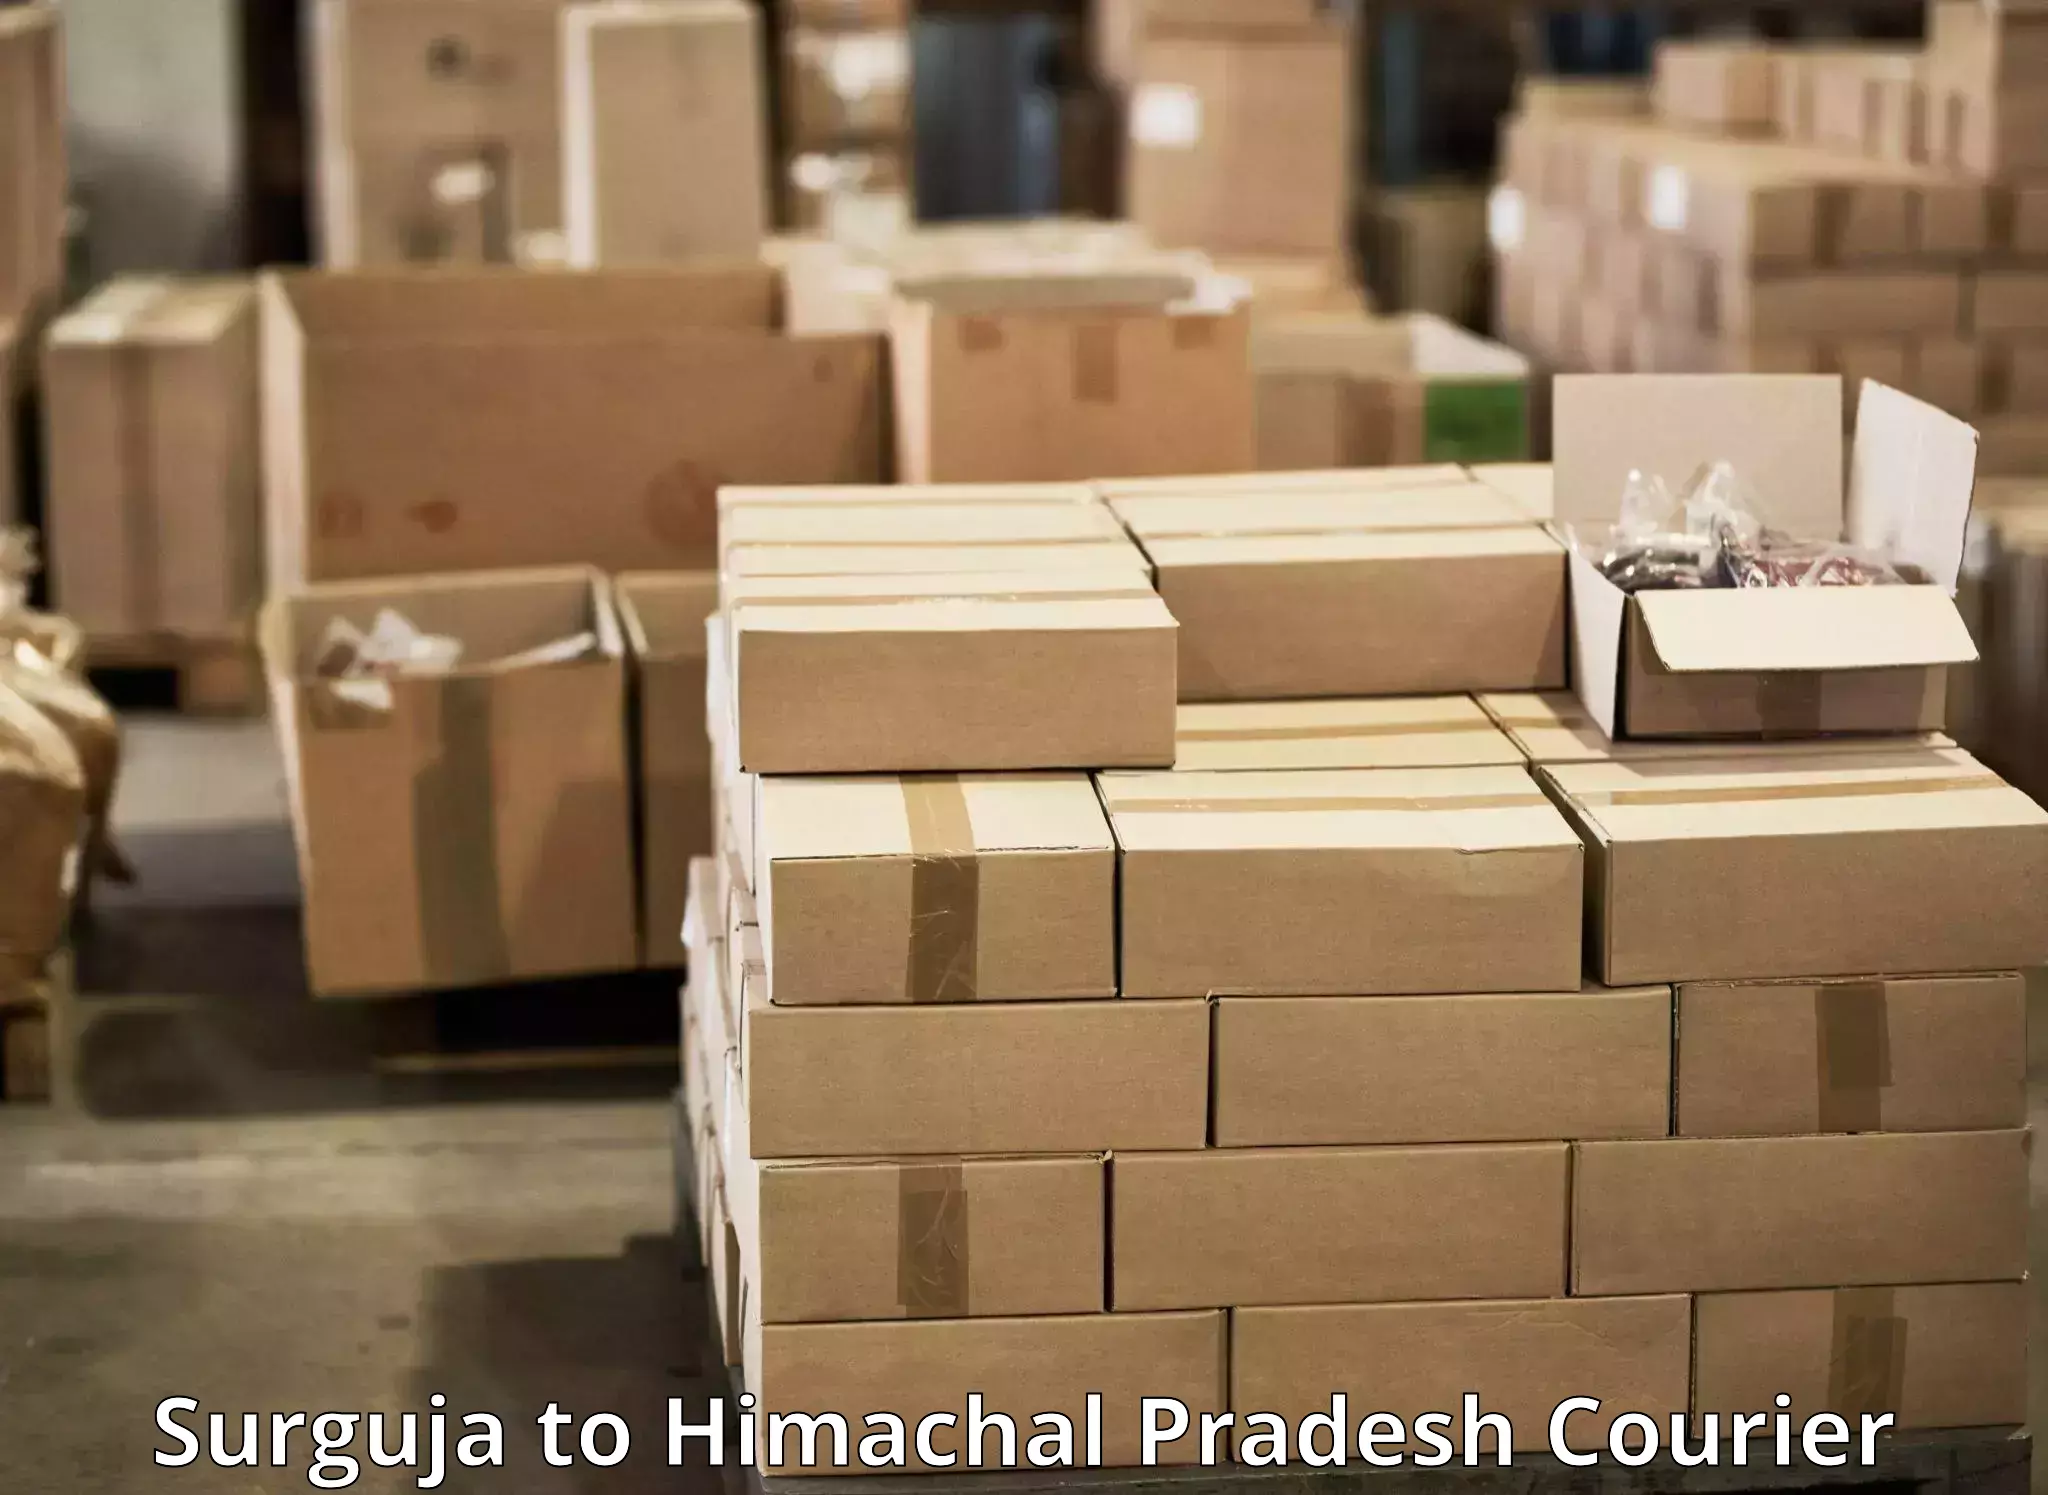 Same-day delivery solutions Surguja to Una Himachal Pradesh